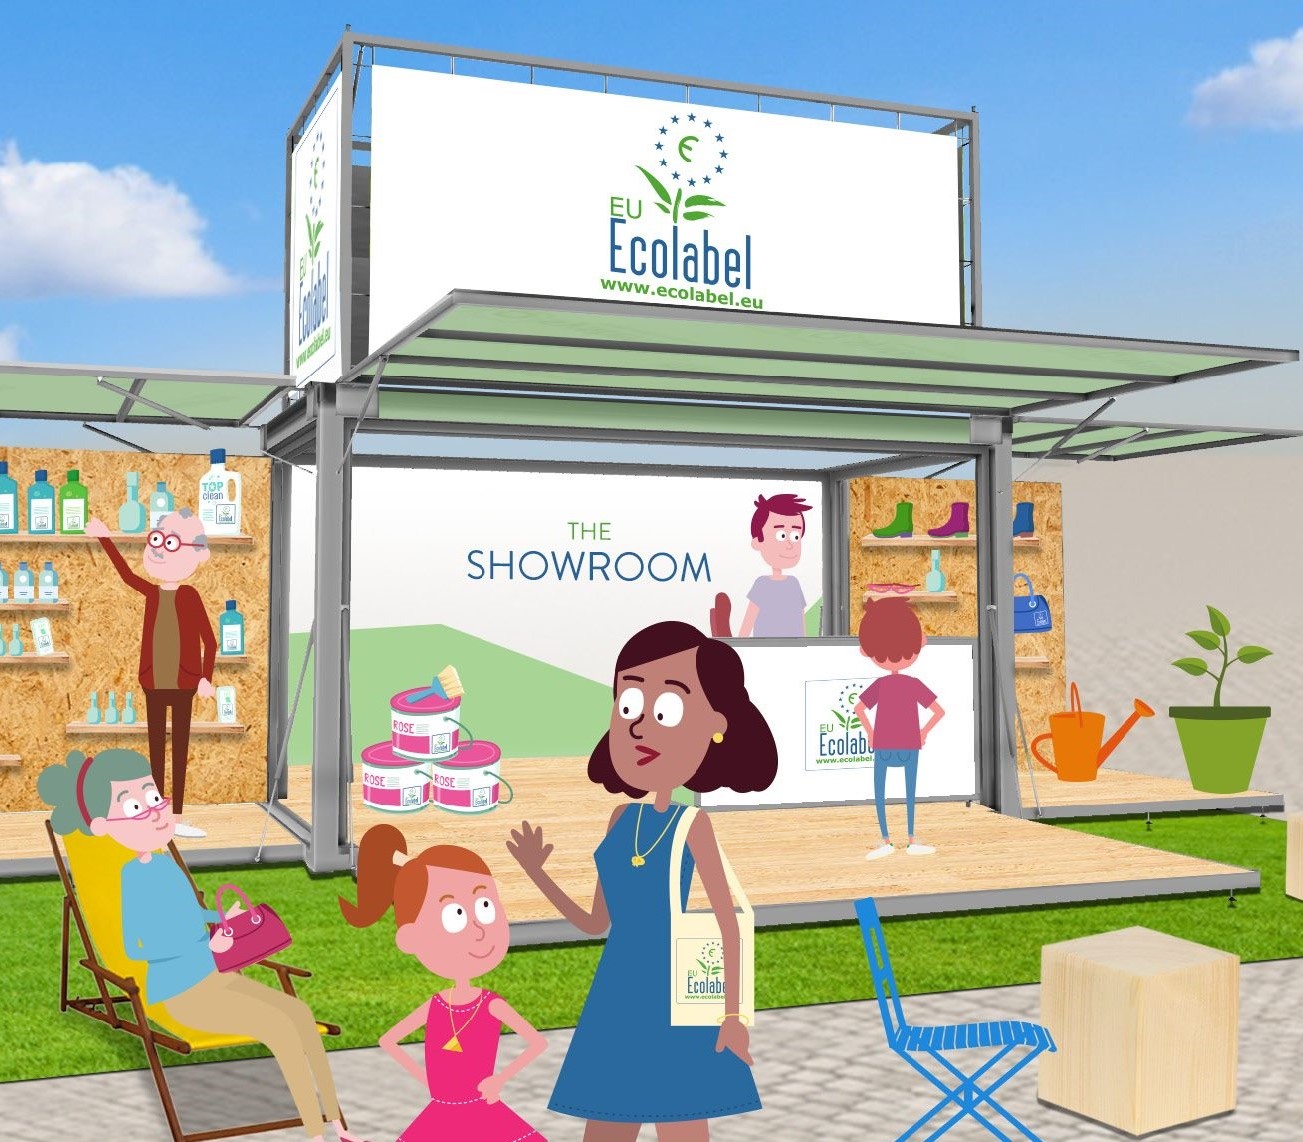 EU Ecolabel showroom image